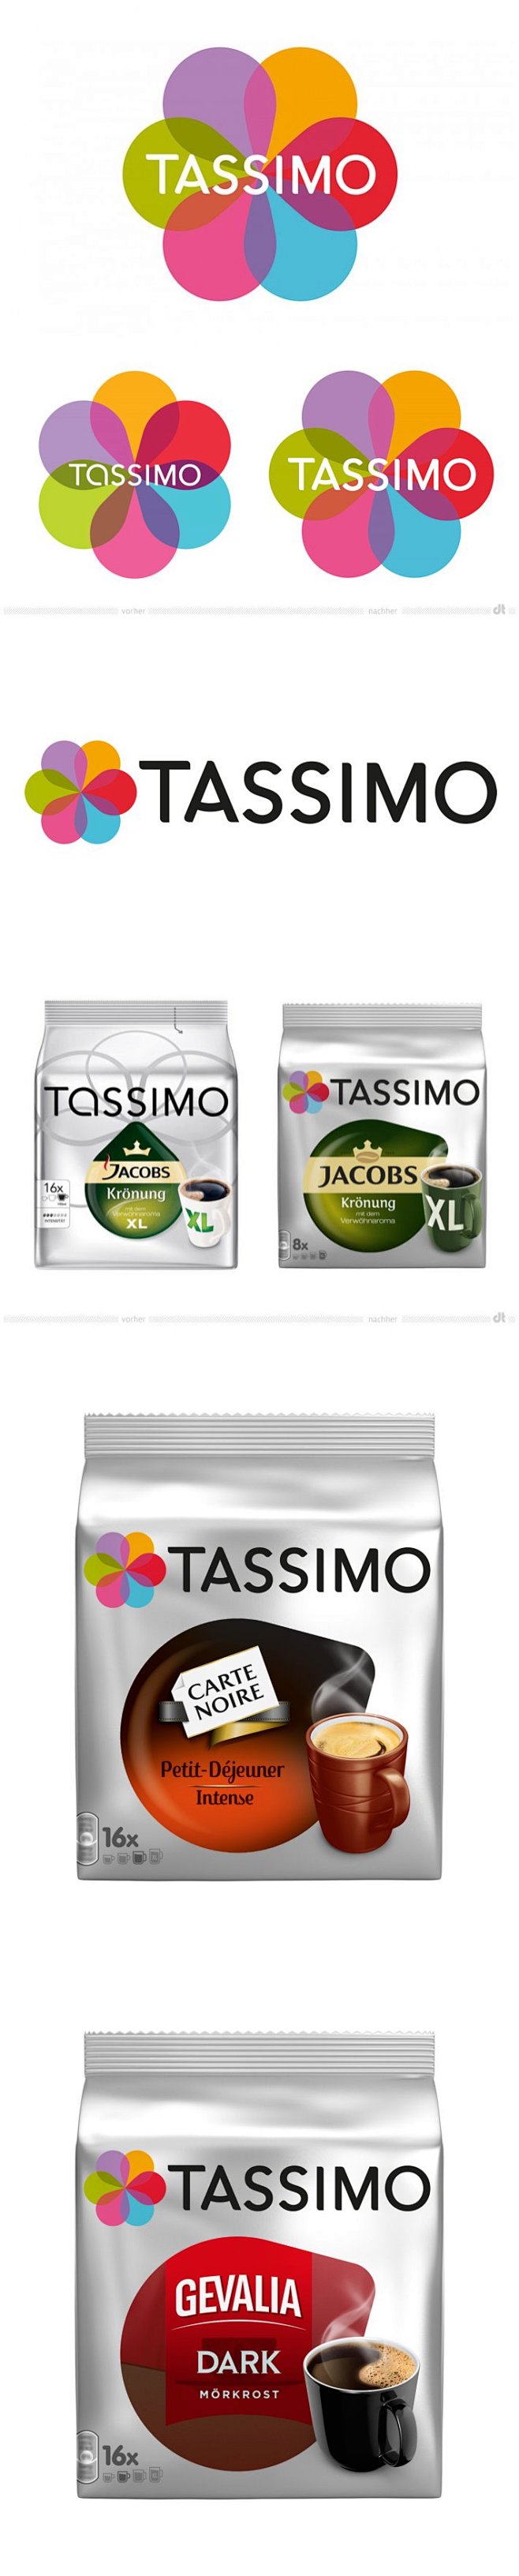 Tassimo 咖啡品牌新形象和新包装设...